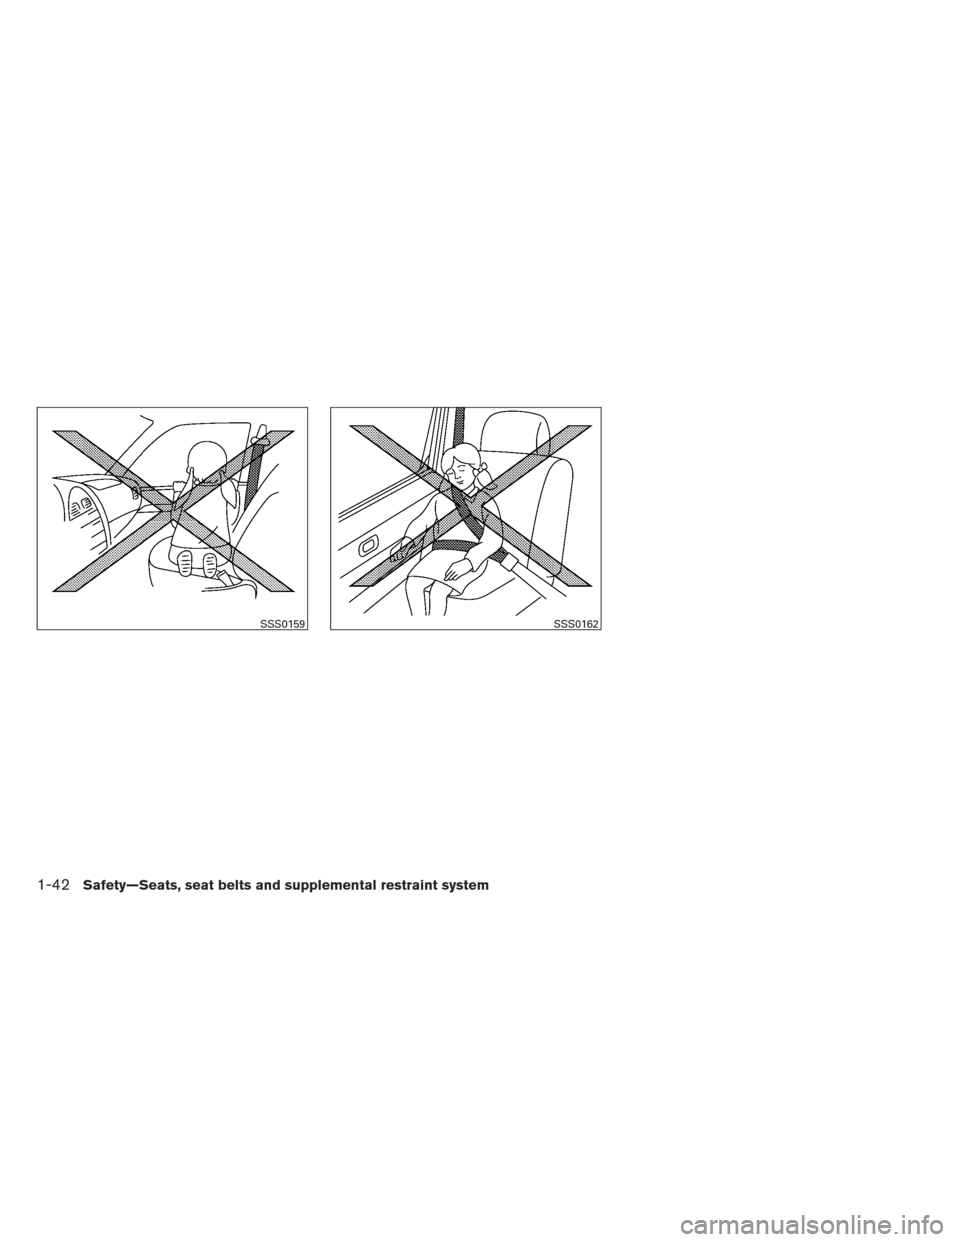 NISSAN VERSA SEDAN 2013 2.G Workshop Manual SSS0159SSS0162
1-42Safety—Seats, seat belts and supplemental restraint system 